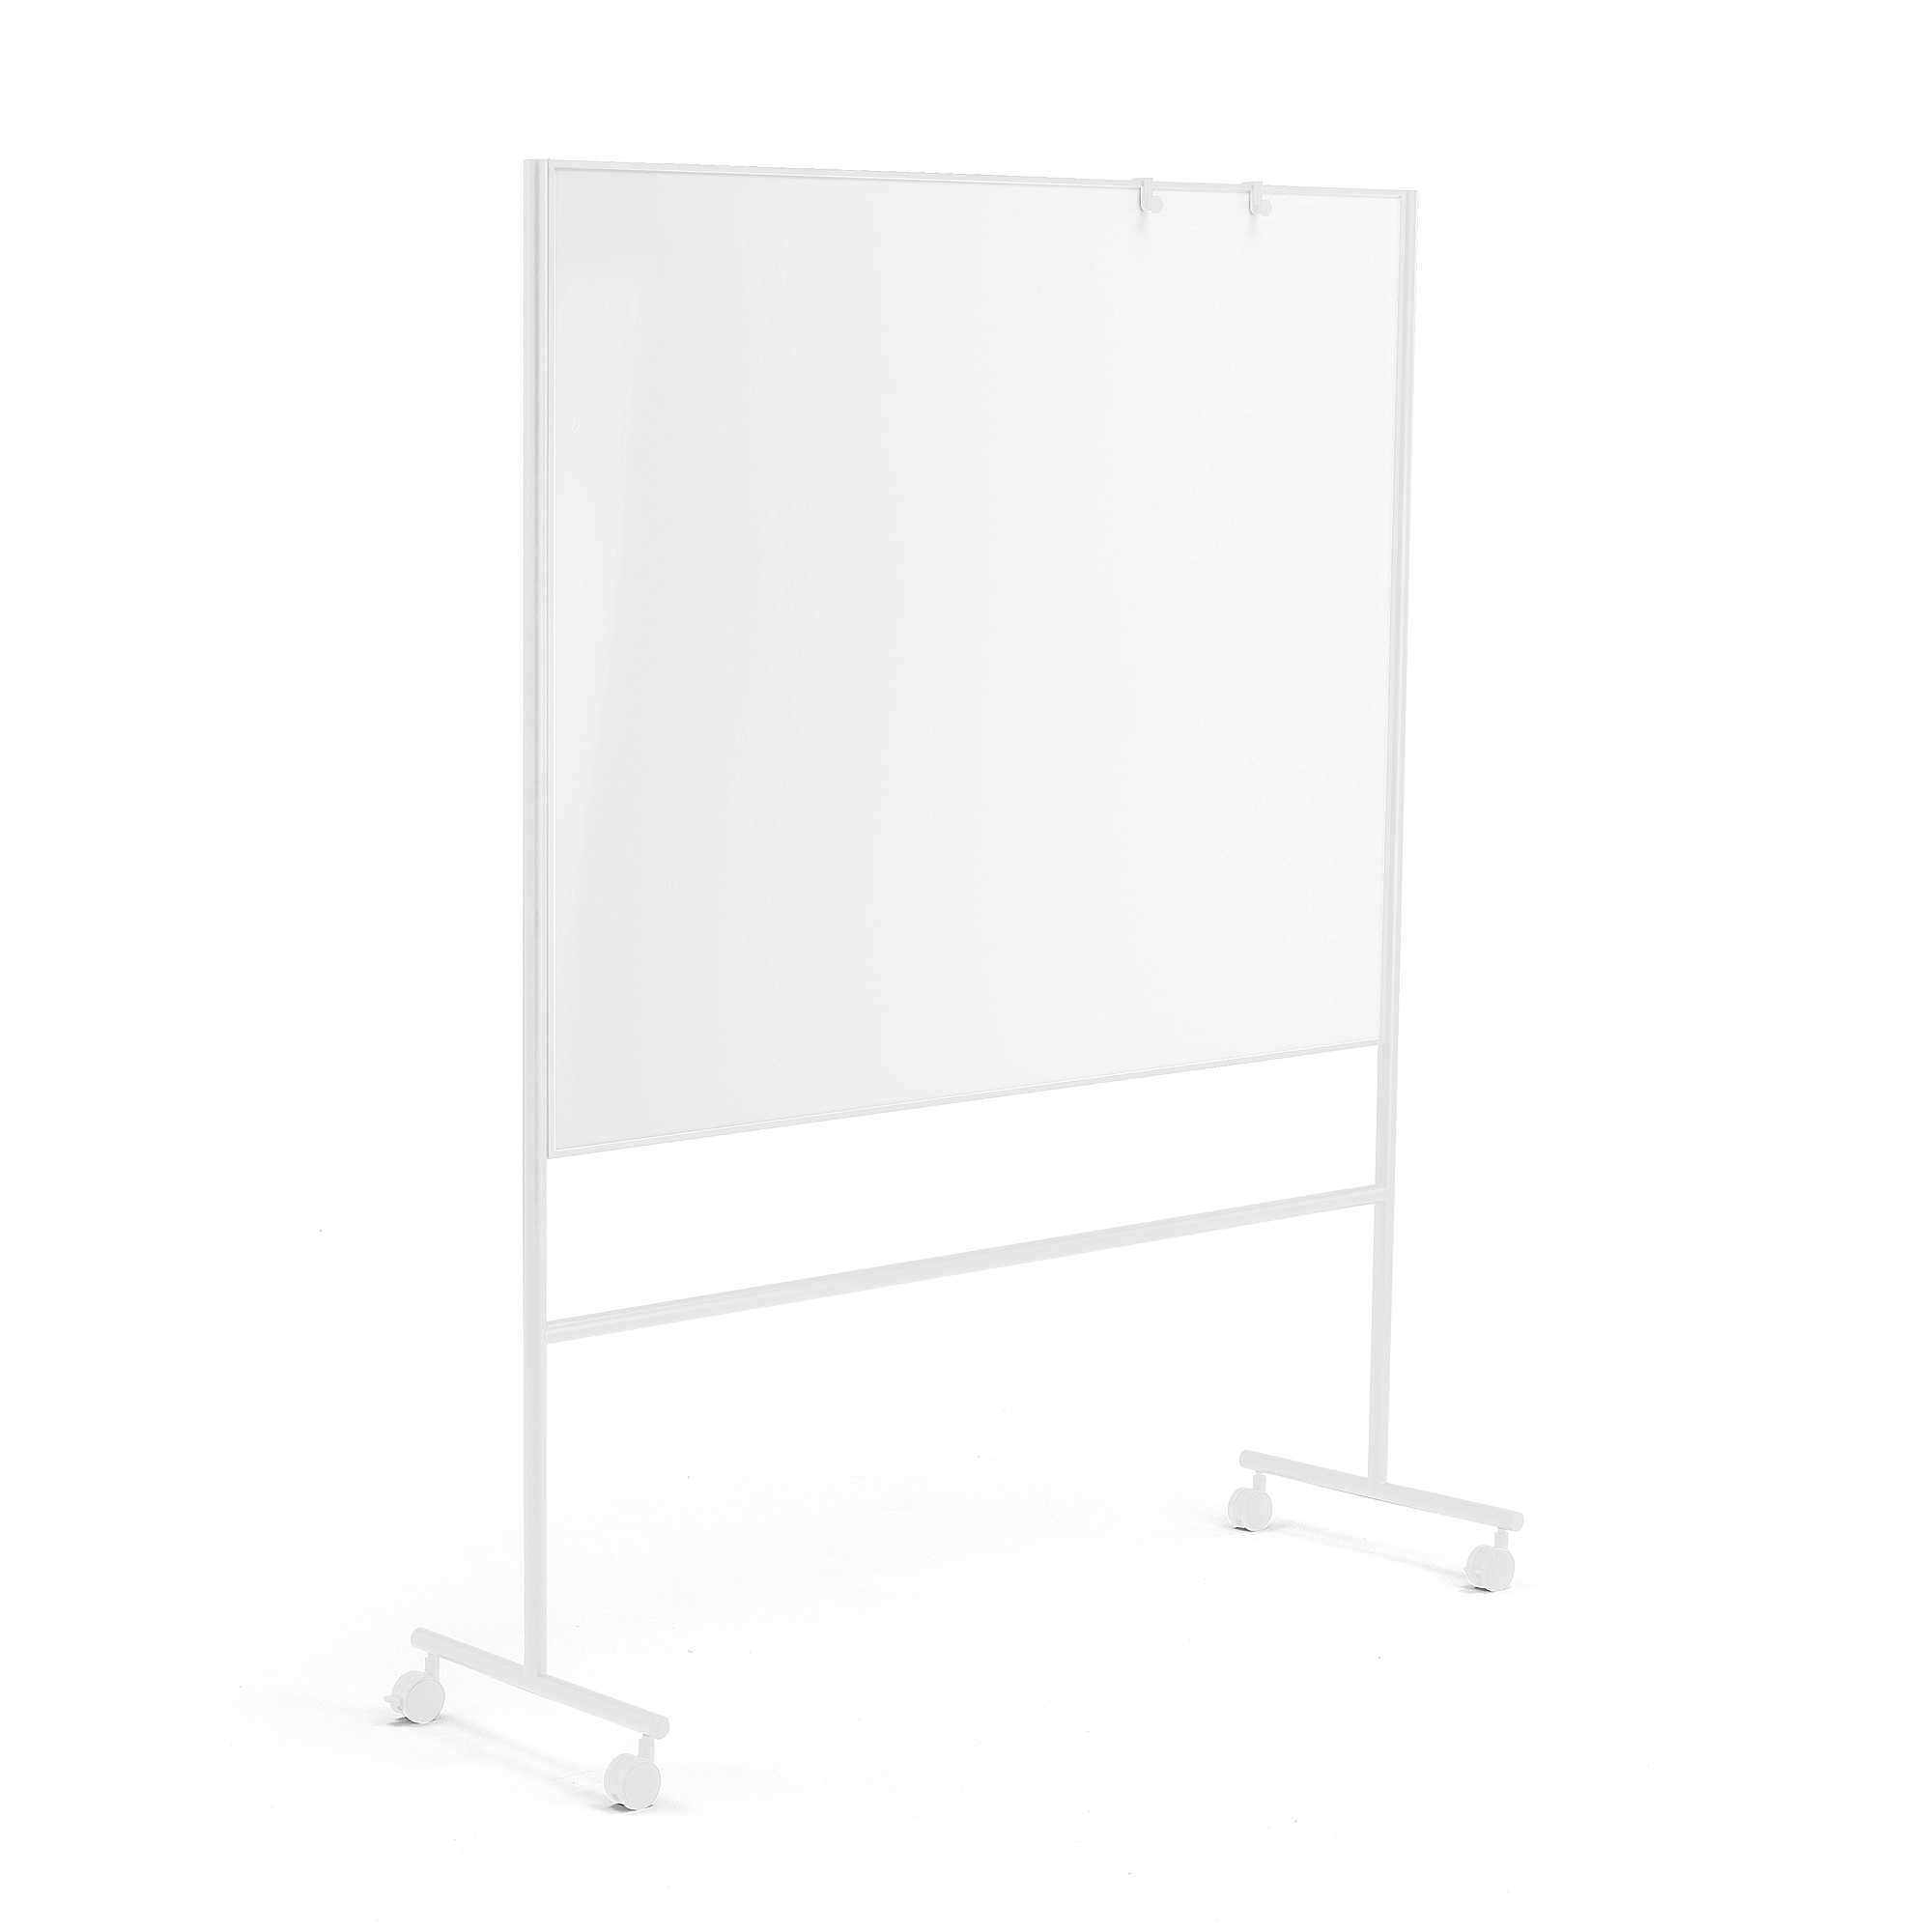 E-shop Biela magnetická tabuľa s kolieskami EMMA, obojstranná, 1500x1200 mm, biely rám